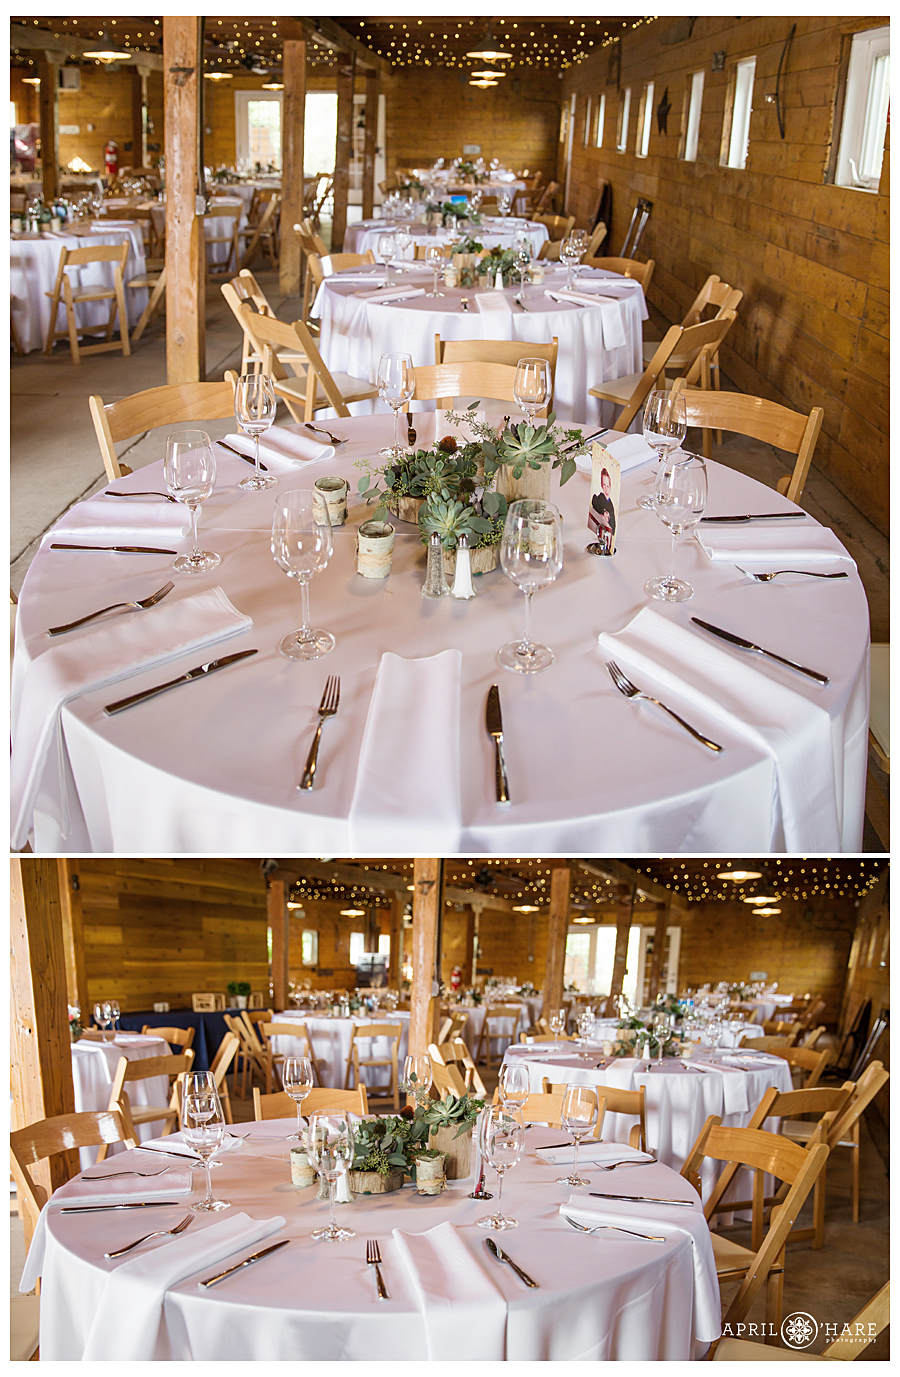 Succulent Centerpieces set up at a Rustic Colorado Wedding Barn Venue at Chatfield Farms